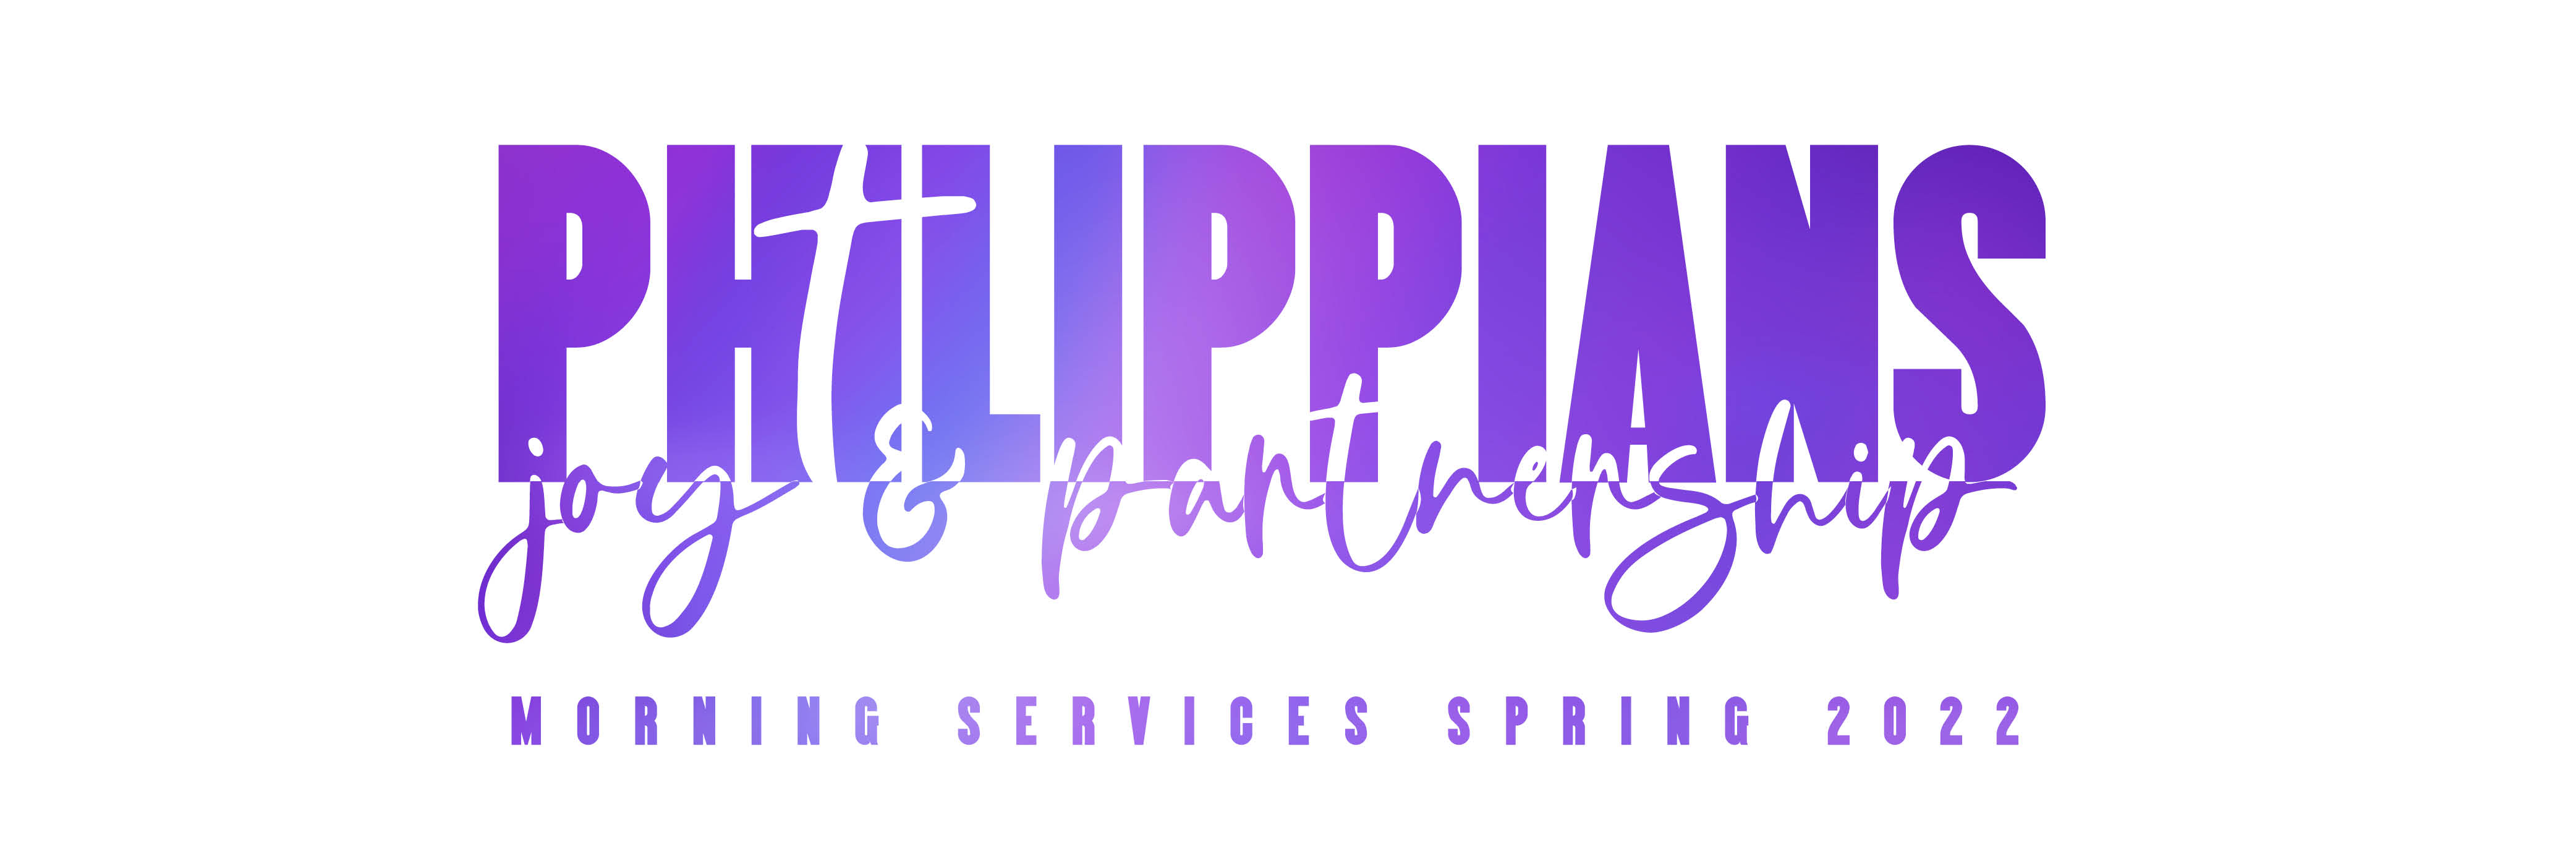 Philippians Web Banner Feb2022